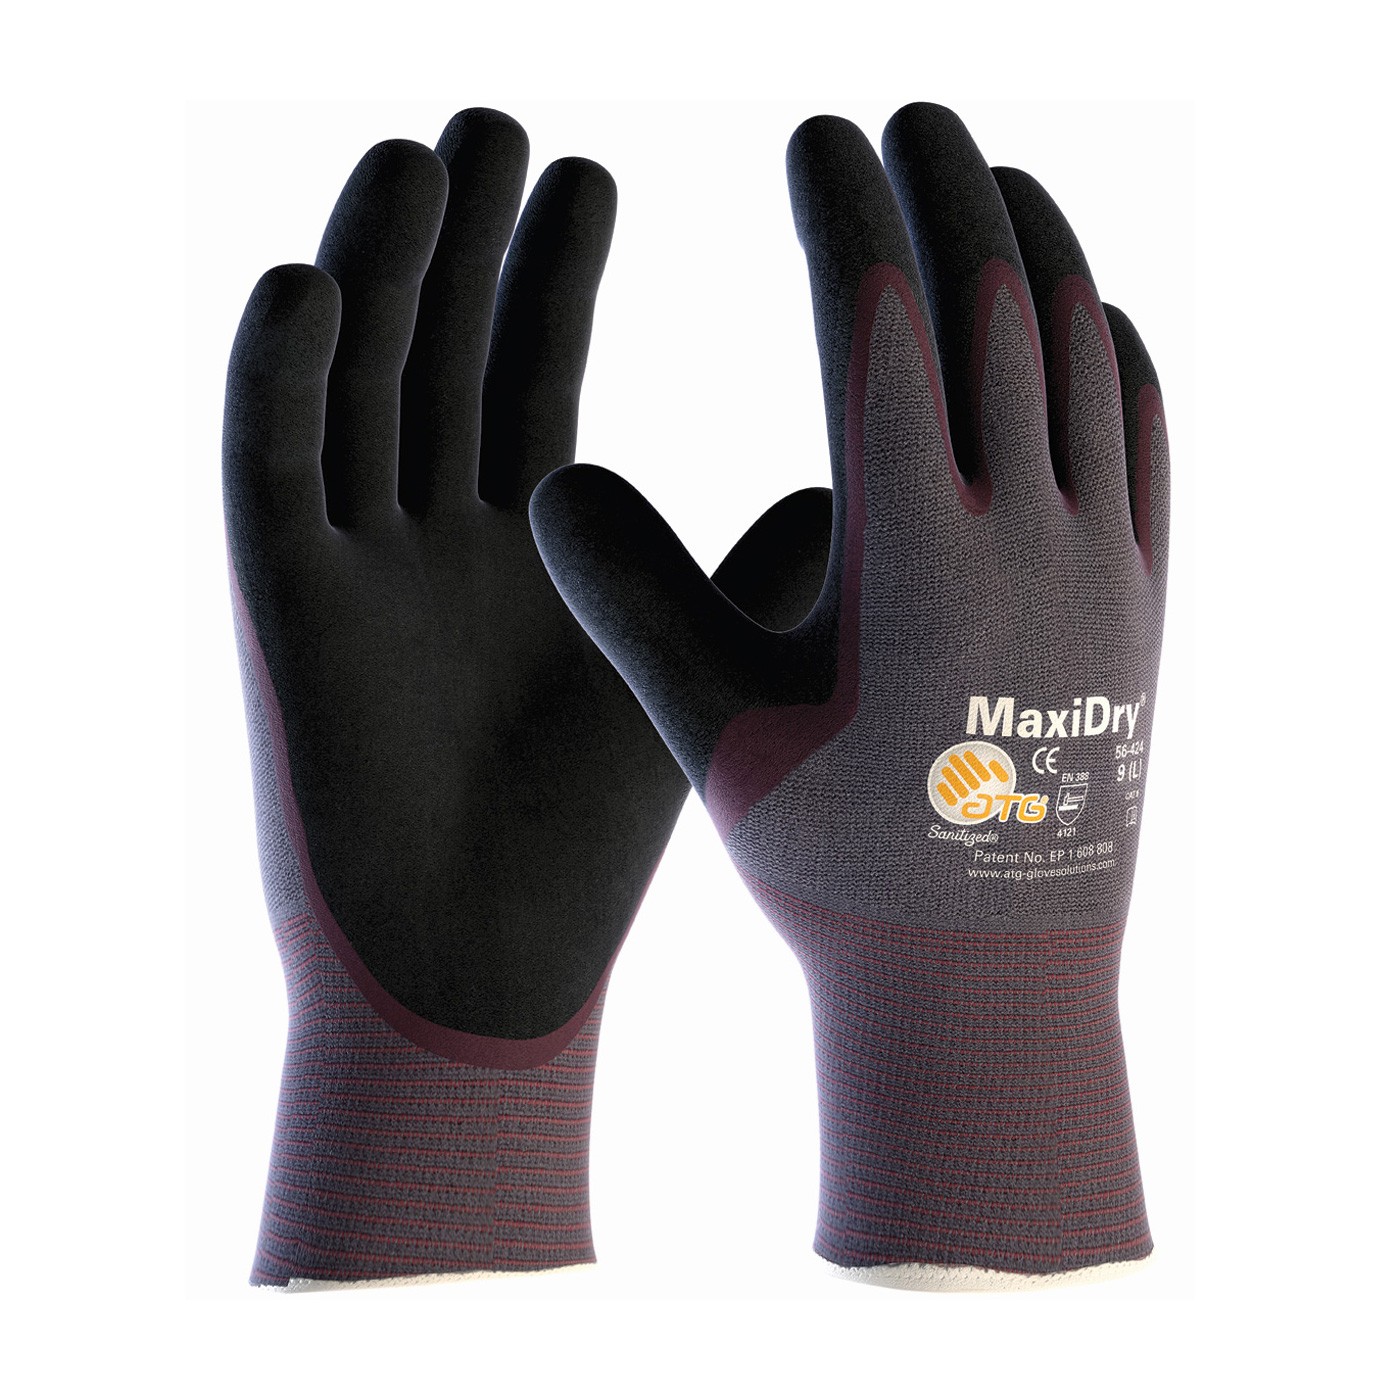 Glove "Maxidry" Coated Palm & Finger Large 6DZPR/CS